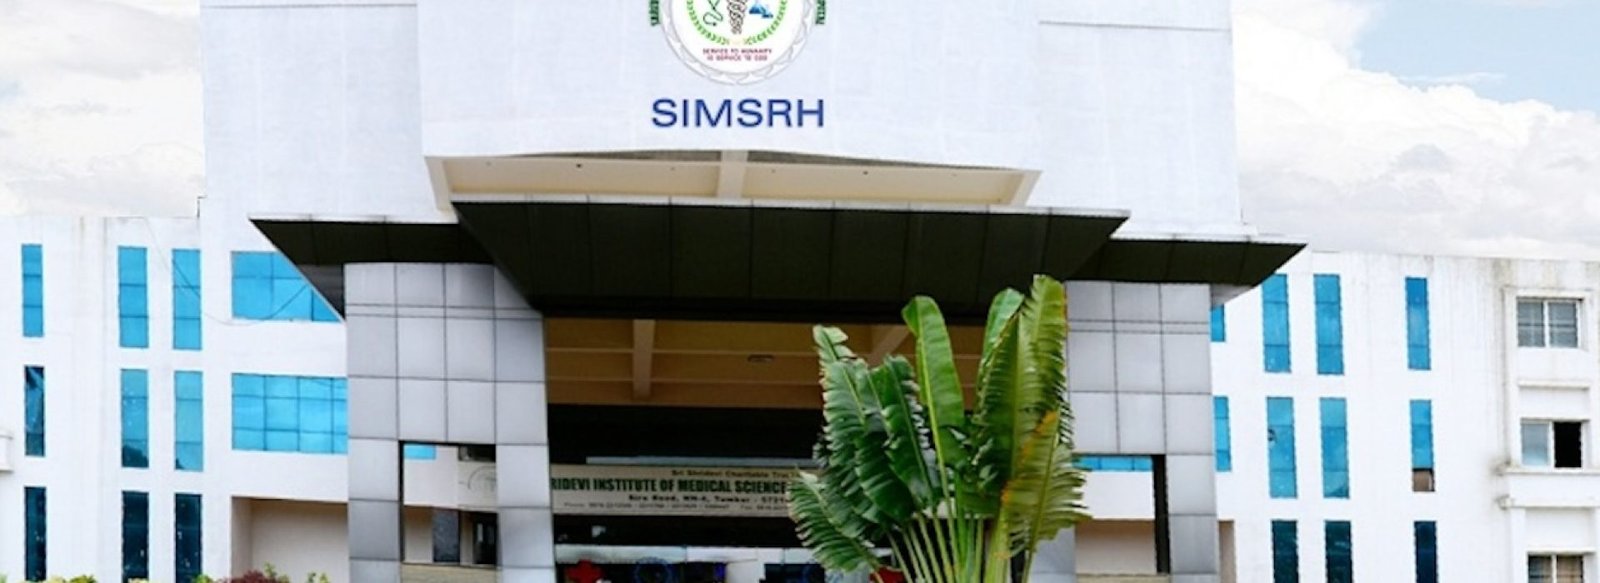 simsrh-building-hospital